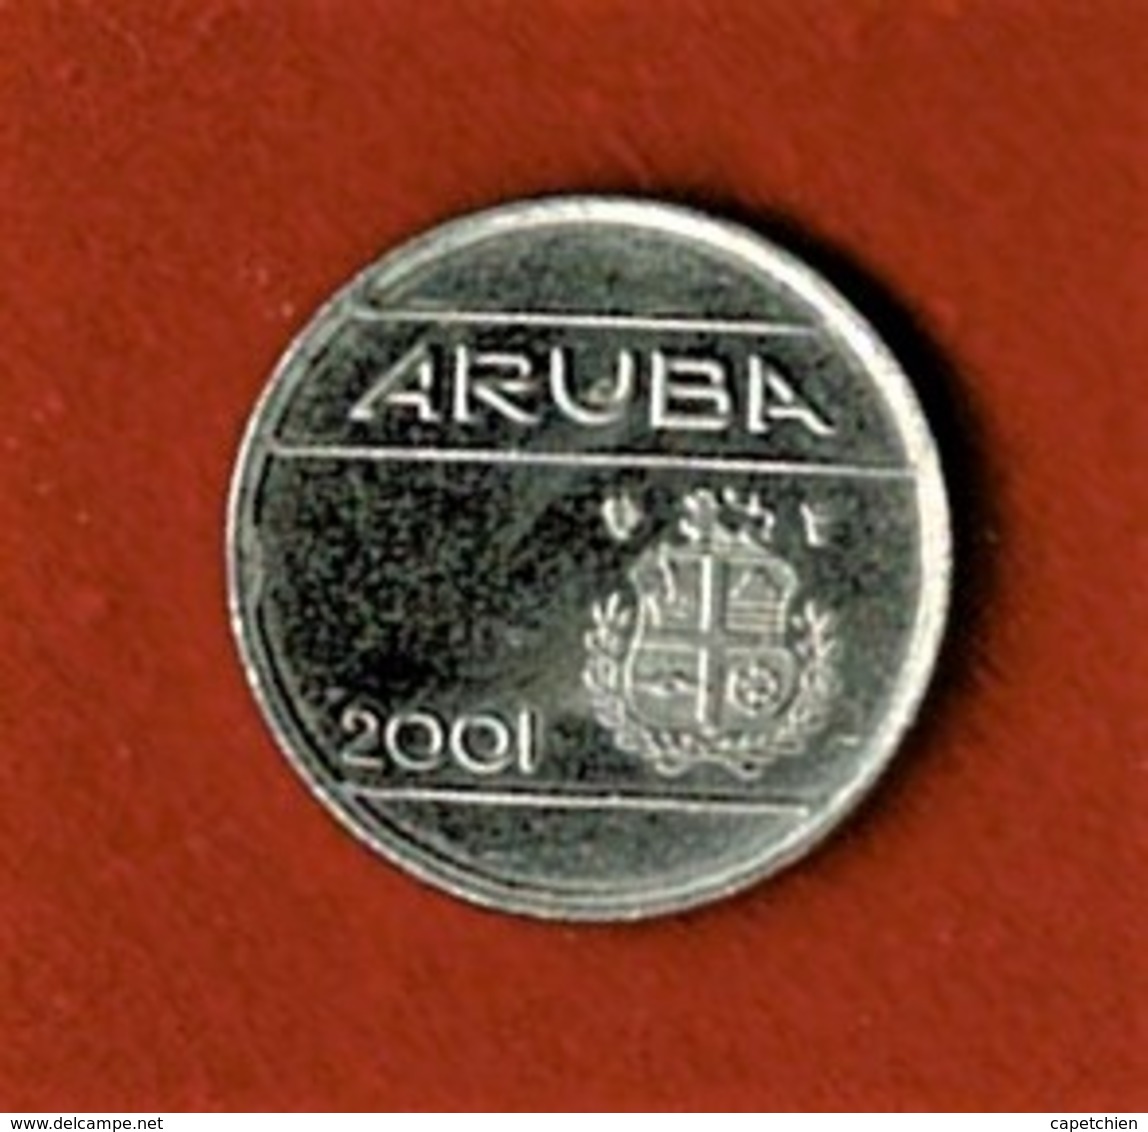 ARUBA / ILE NEERLANDAISE DES CARAIBES / 5 C. / 2001 - Other - America